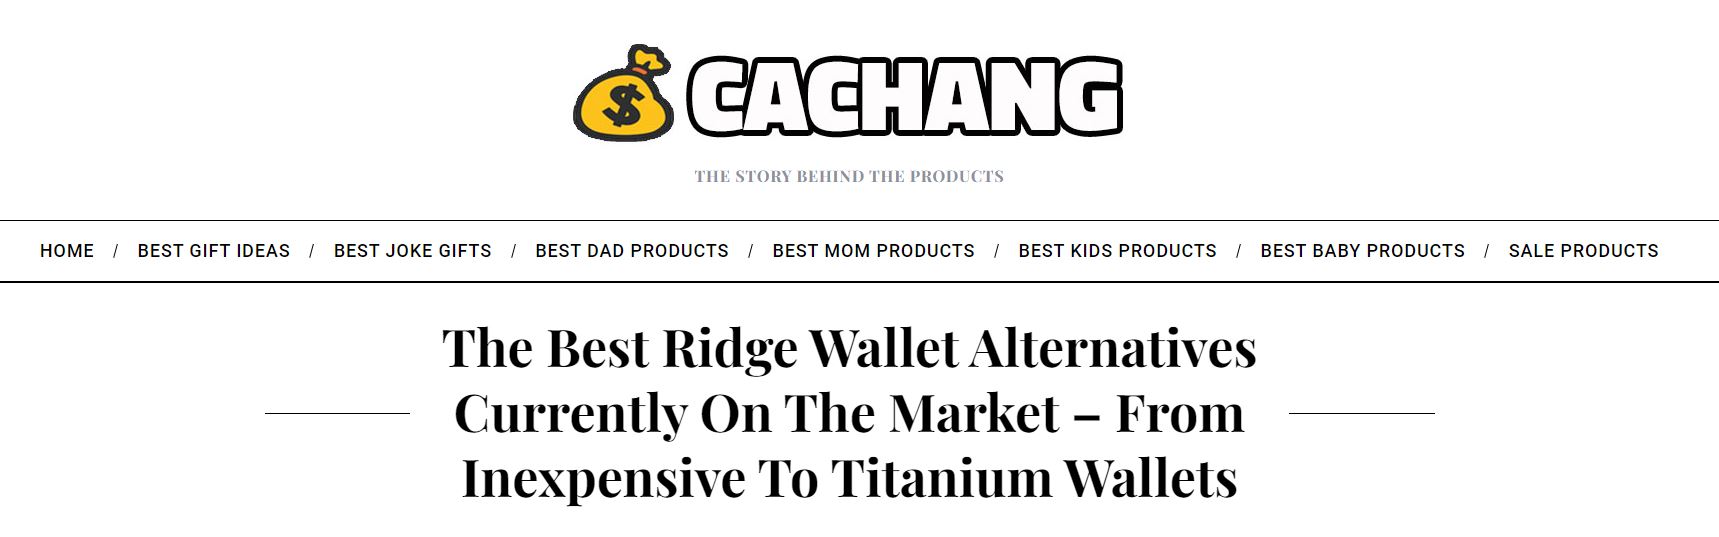 best ridge wallet alternatives currently on the market